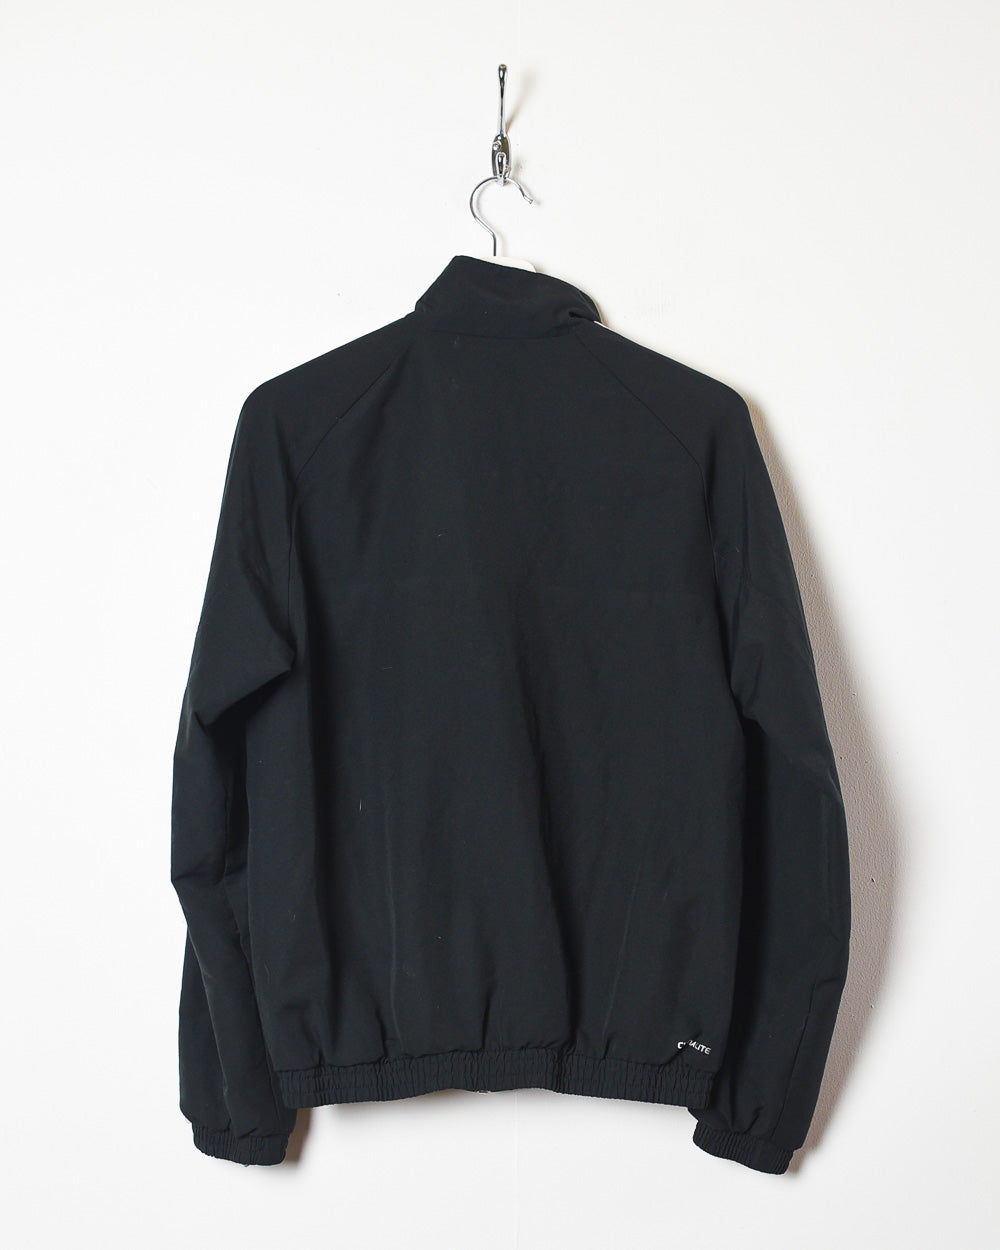 Black Adidas Windbreaker Jacket - Small